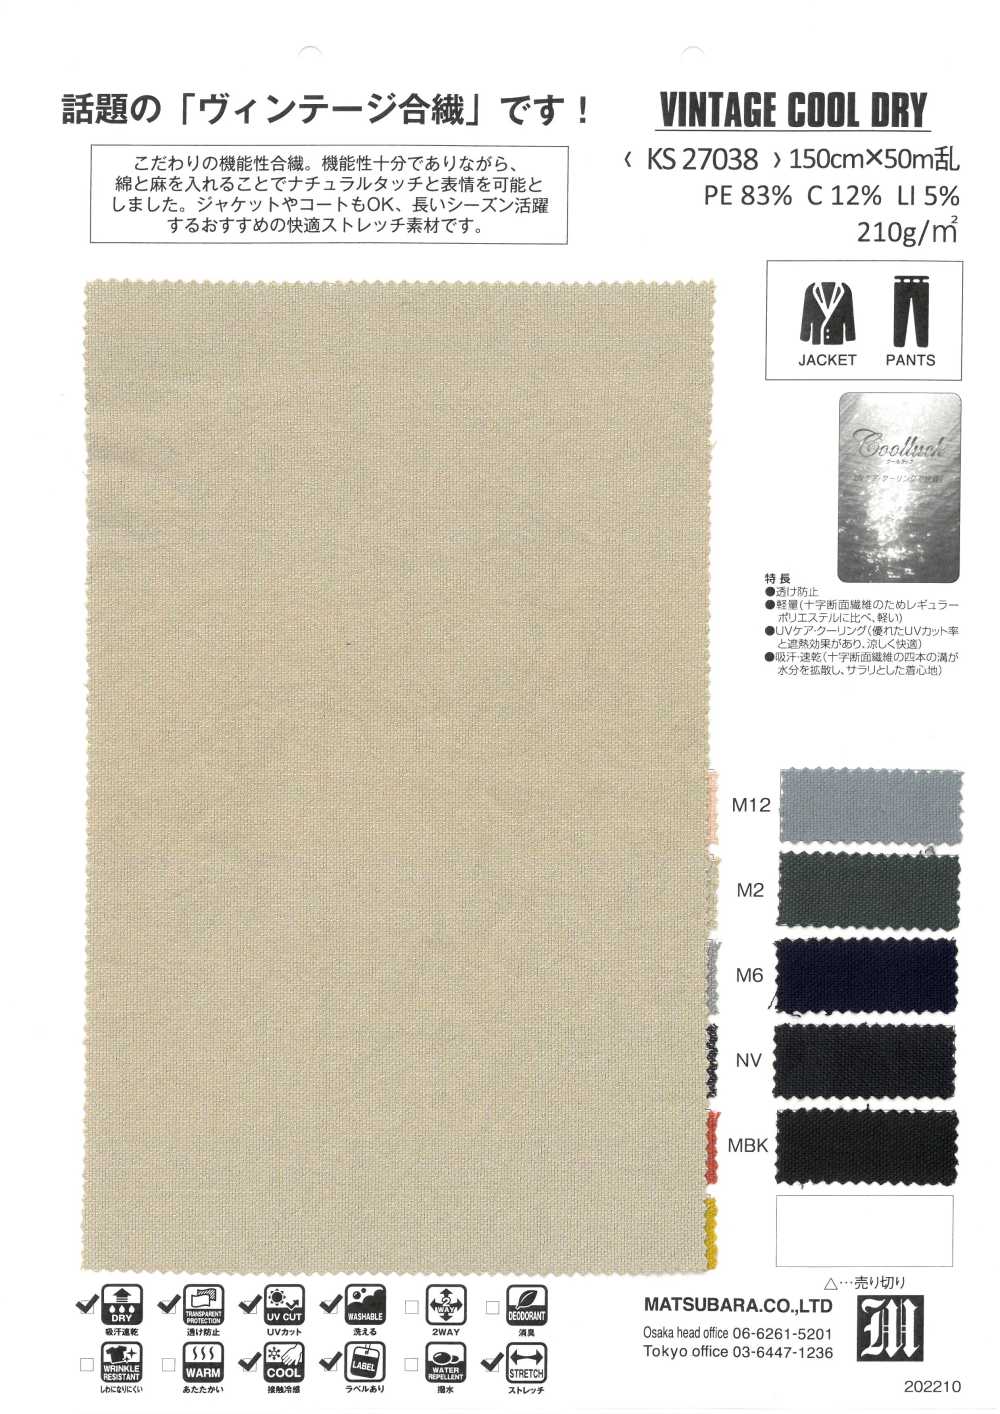 KS27038 VINTAGE KÜHLTROCKEN[Textilgewebe] Matsubara